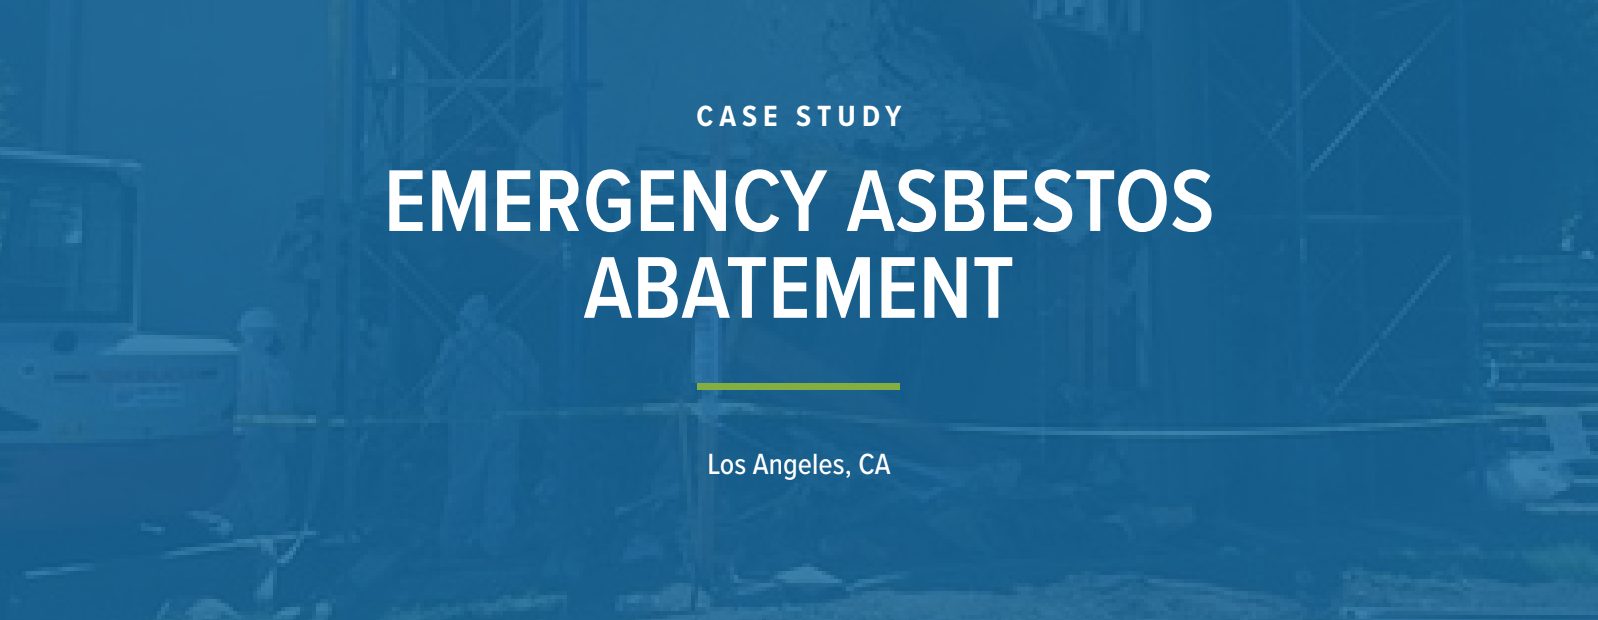 Case study: emergency asbestos abatement